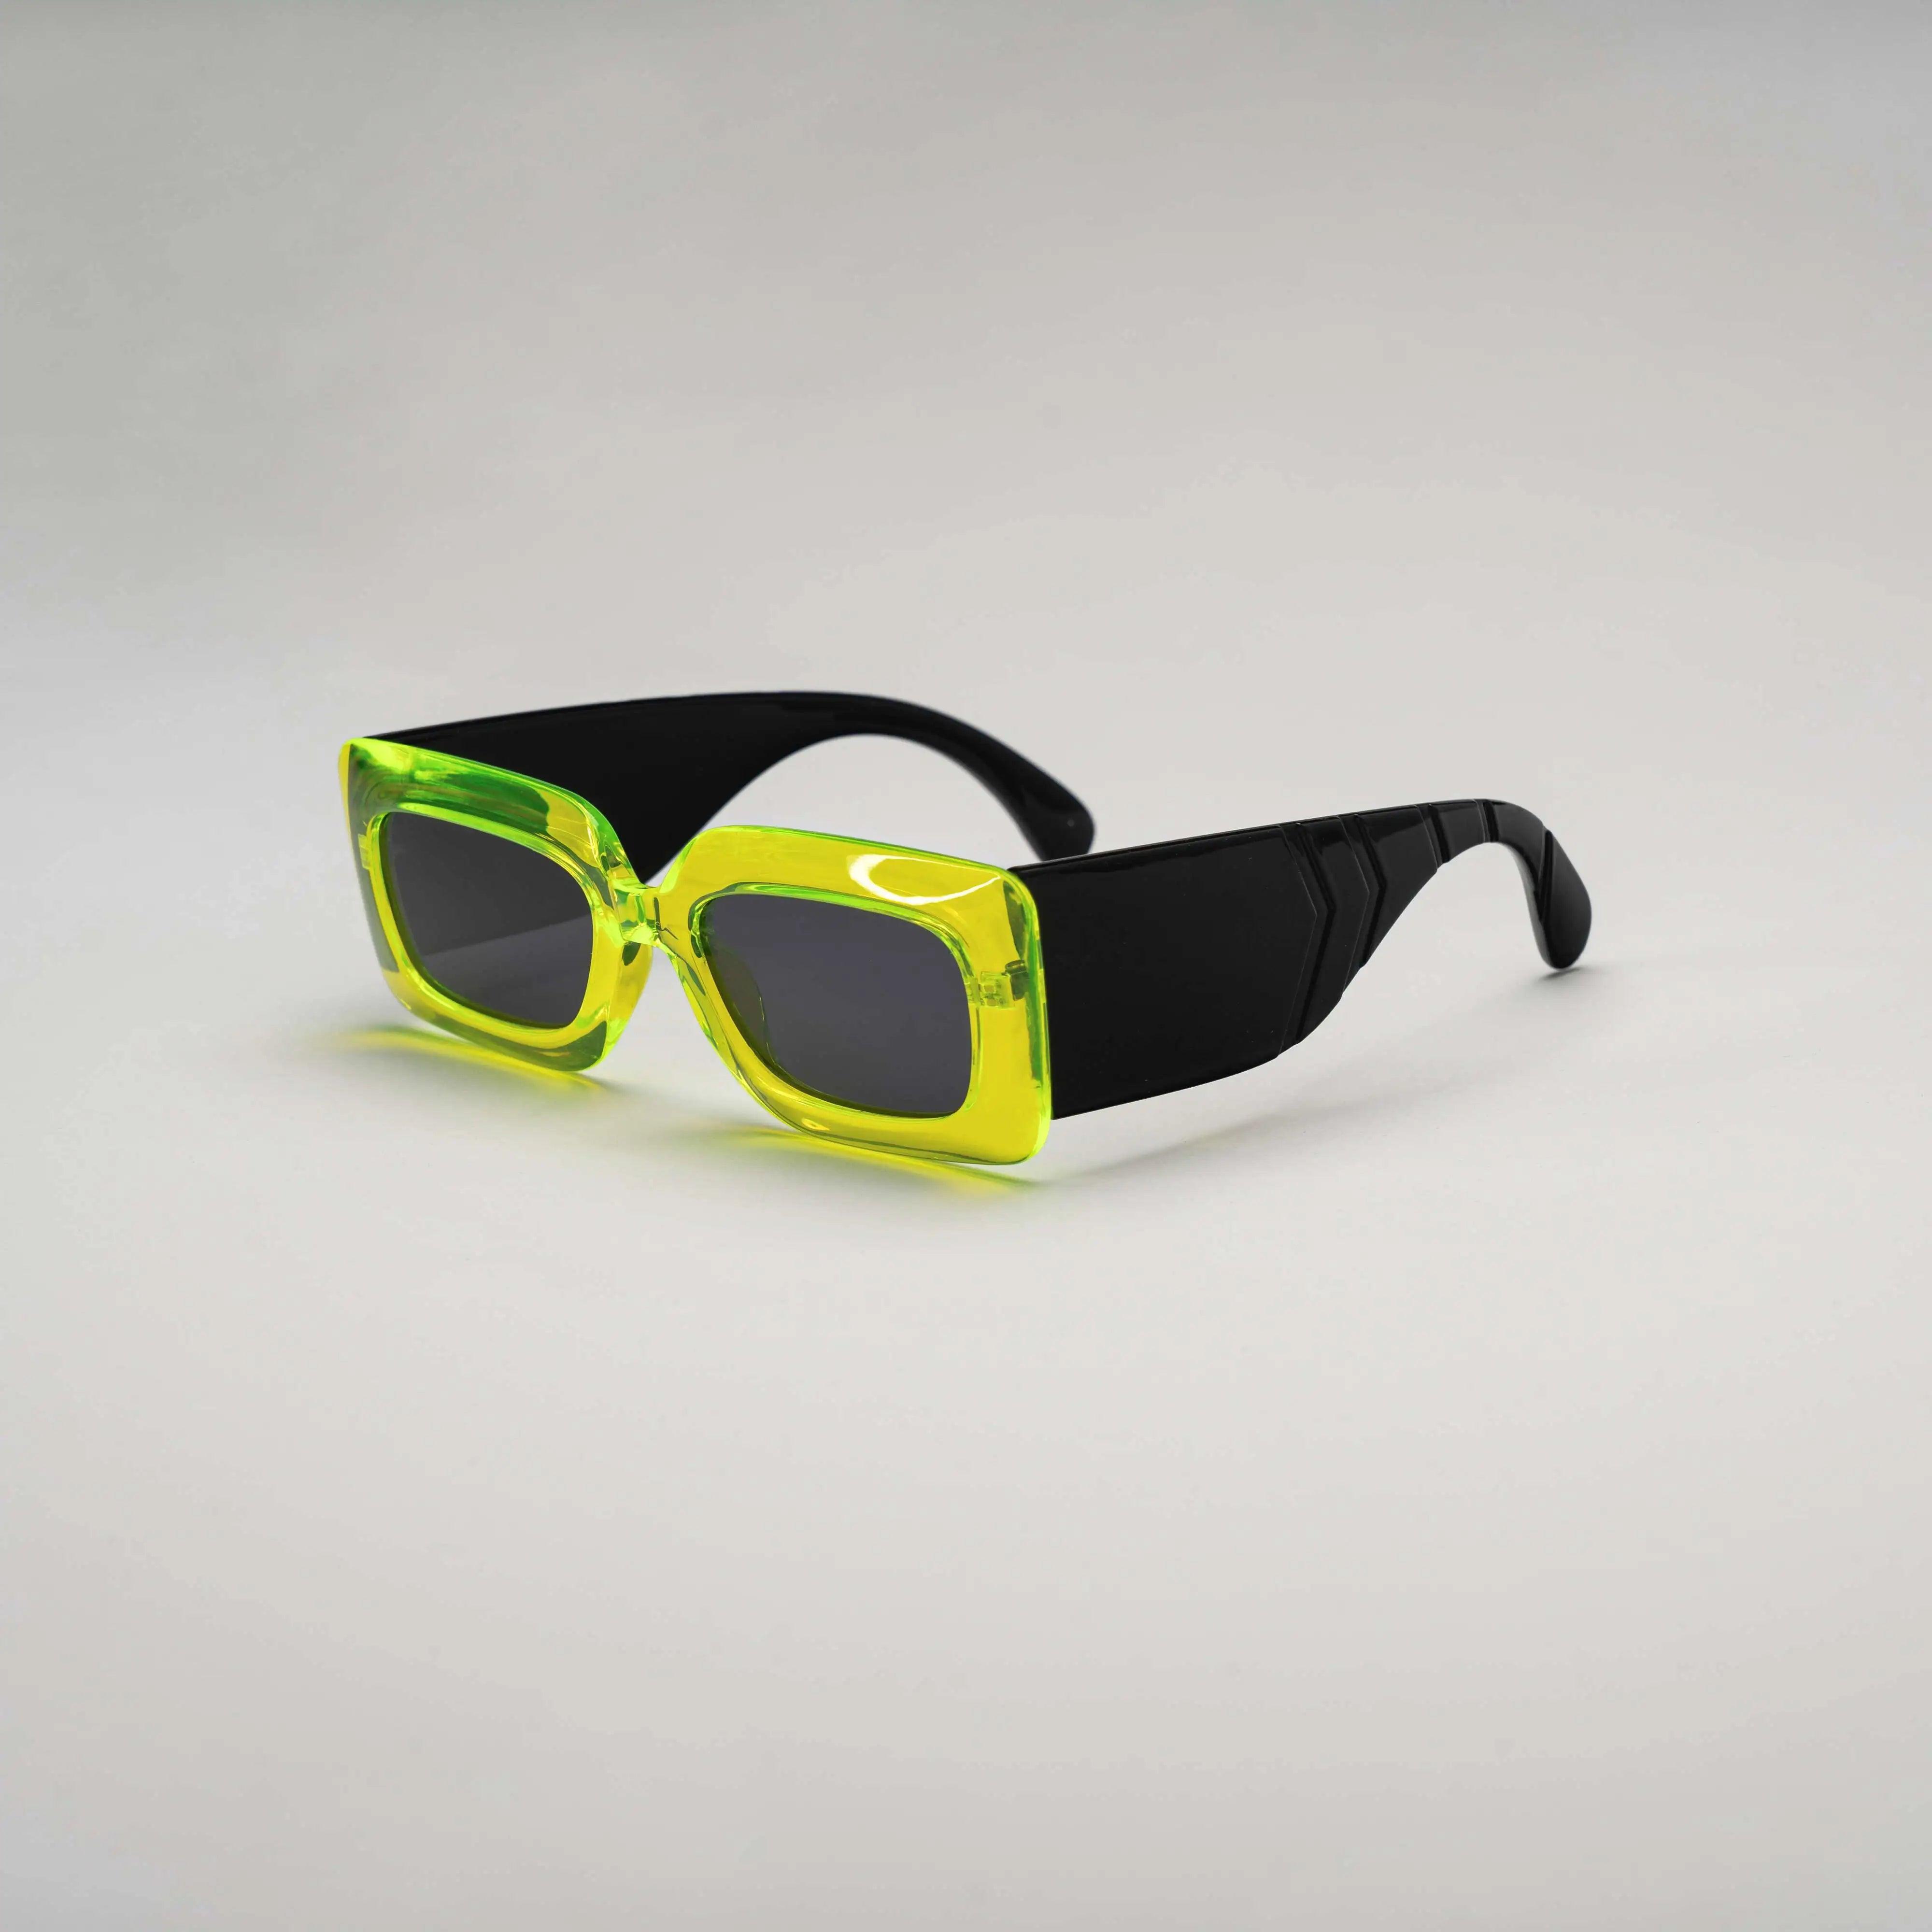 'Acid' Retro Square Sunglasses in Green